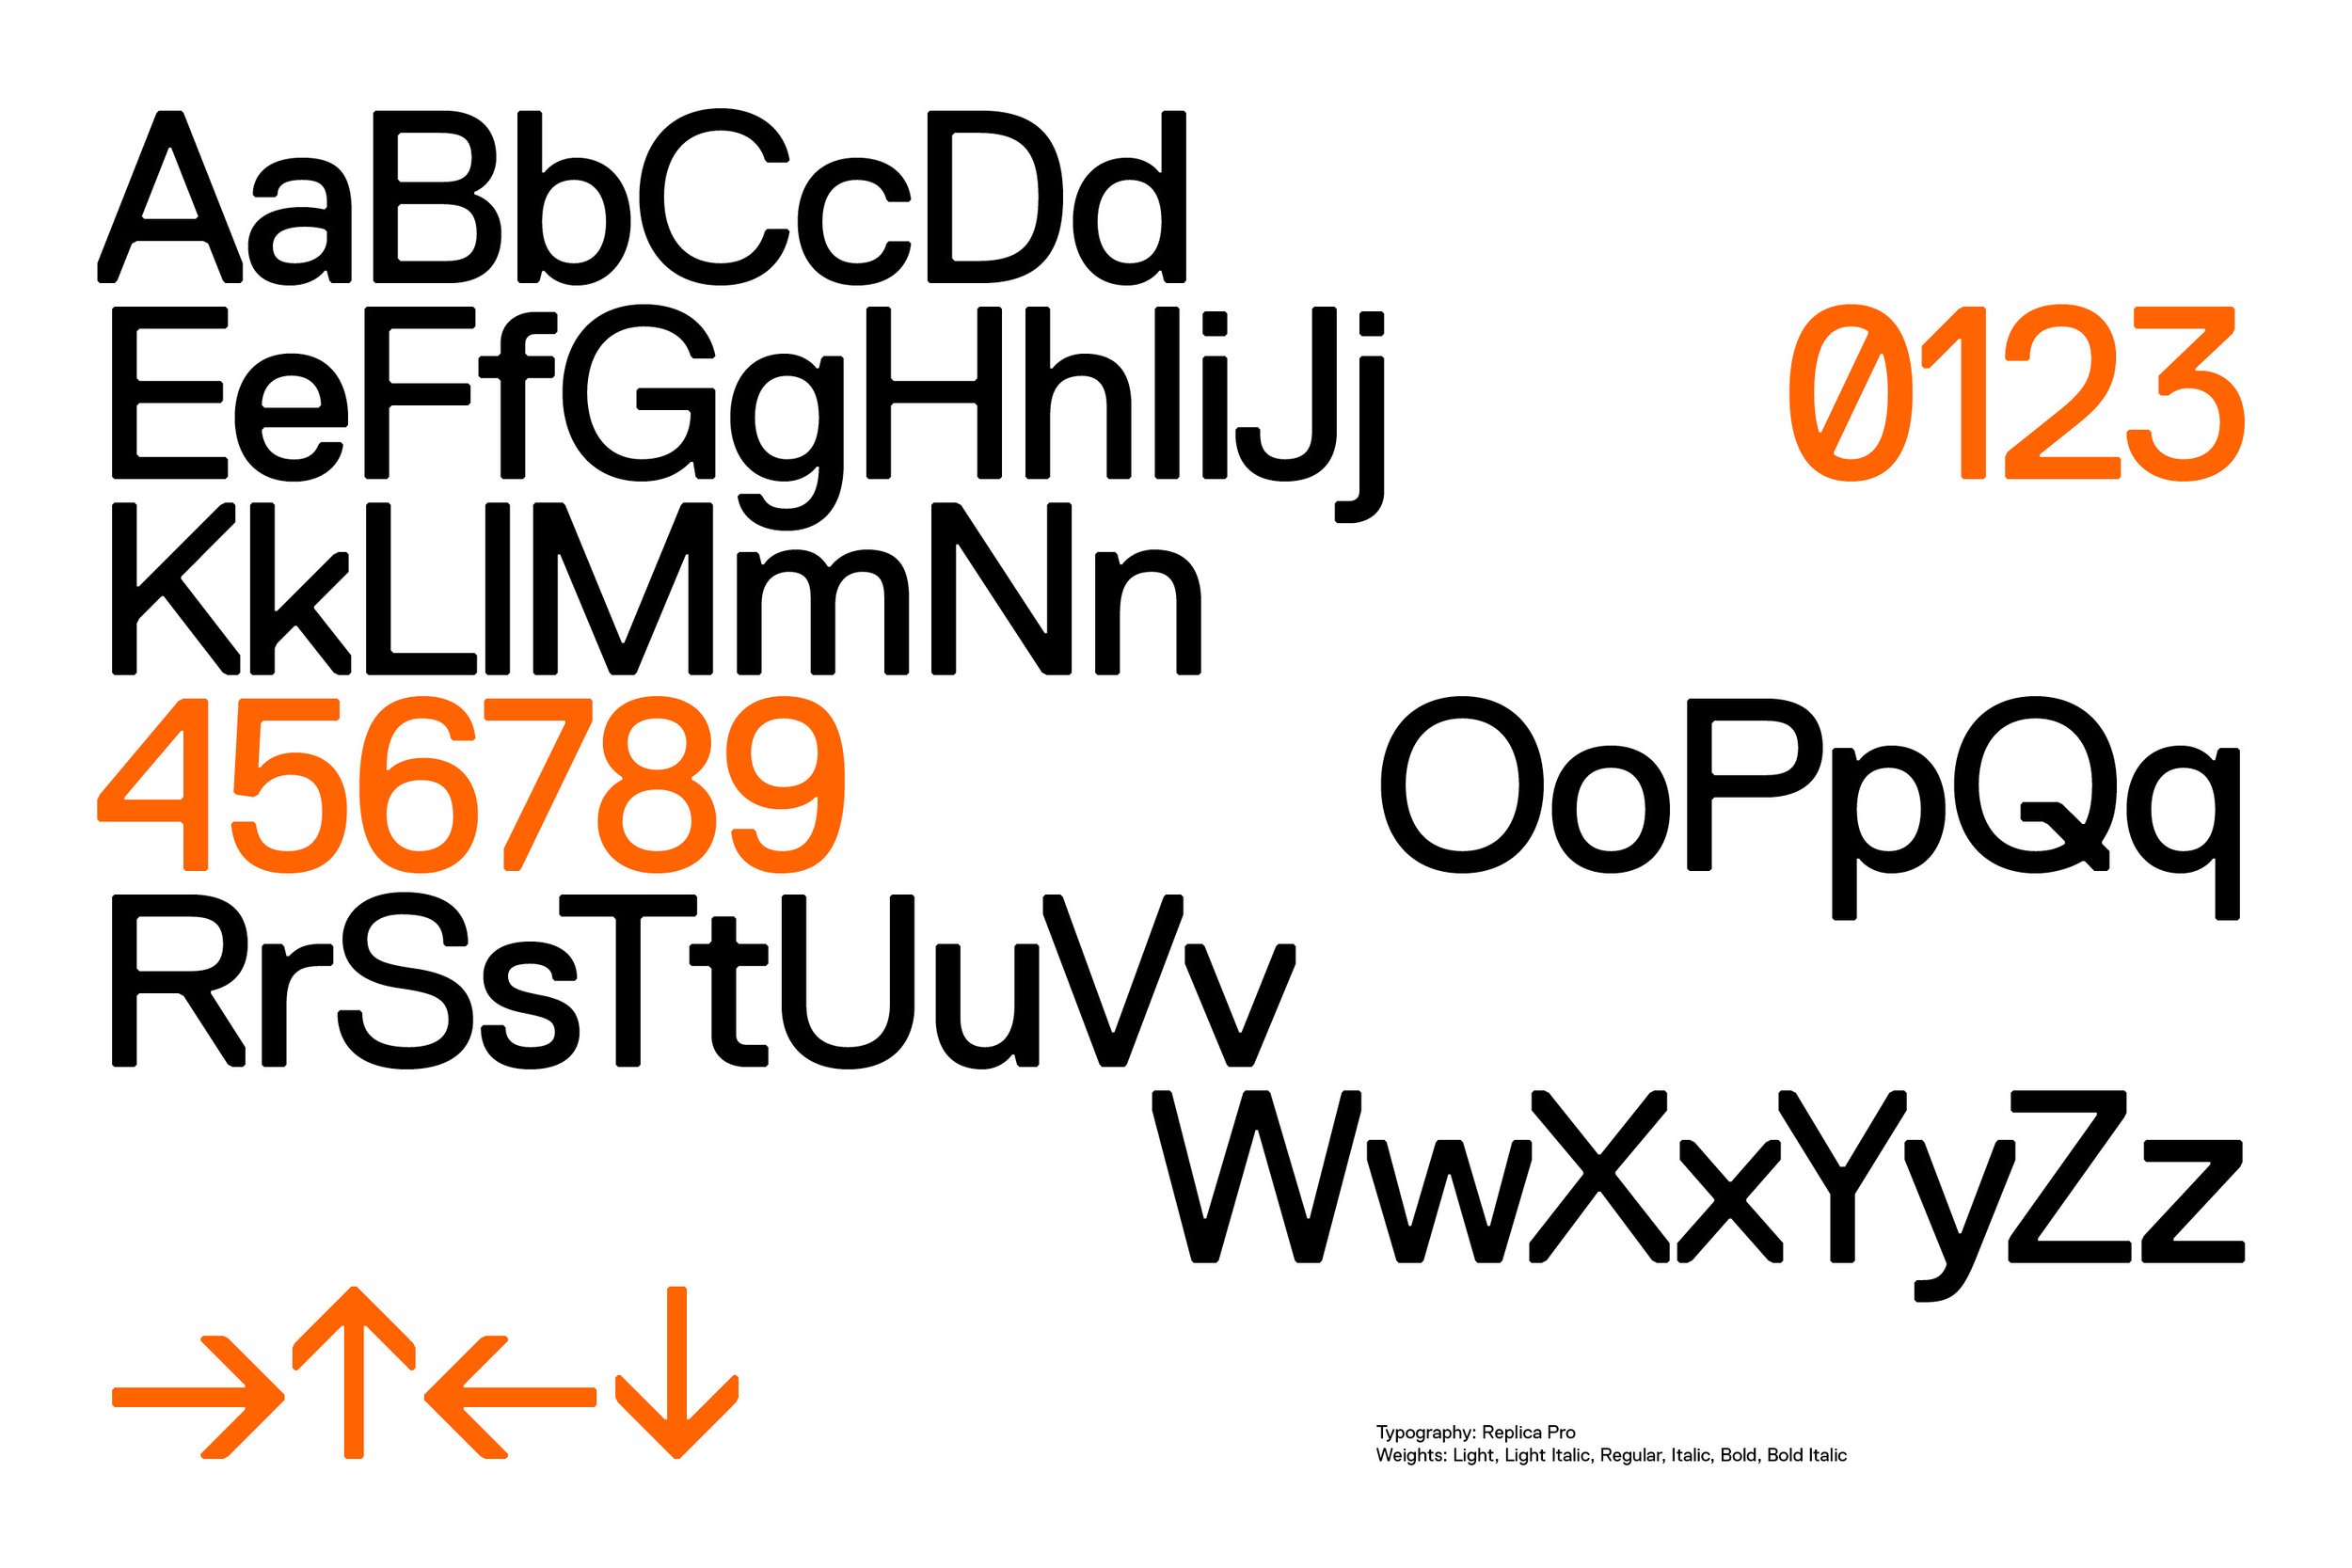 Presentation of the typographic identity element for Sporveien